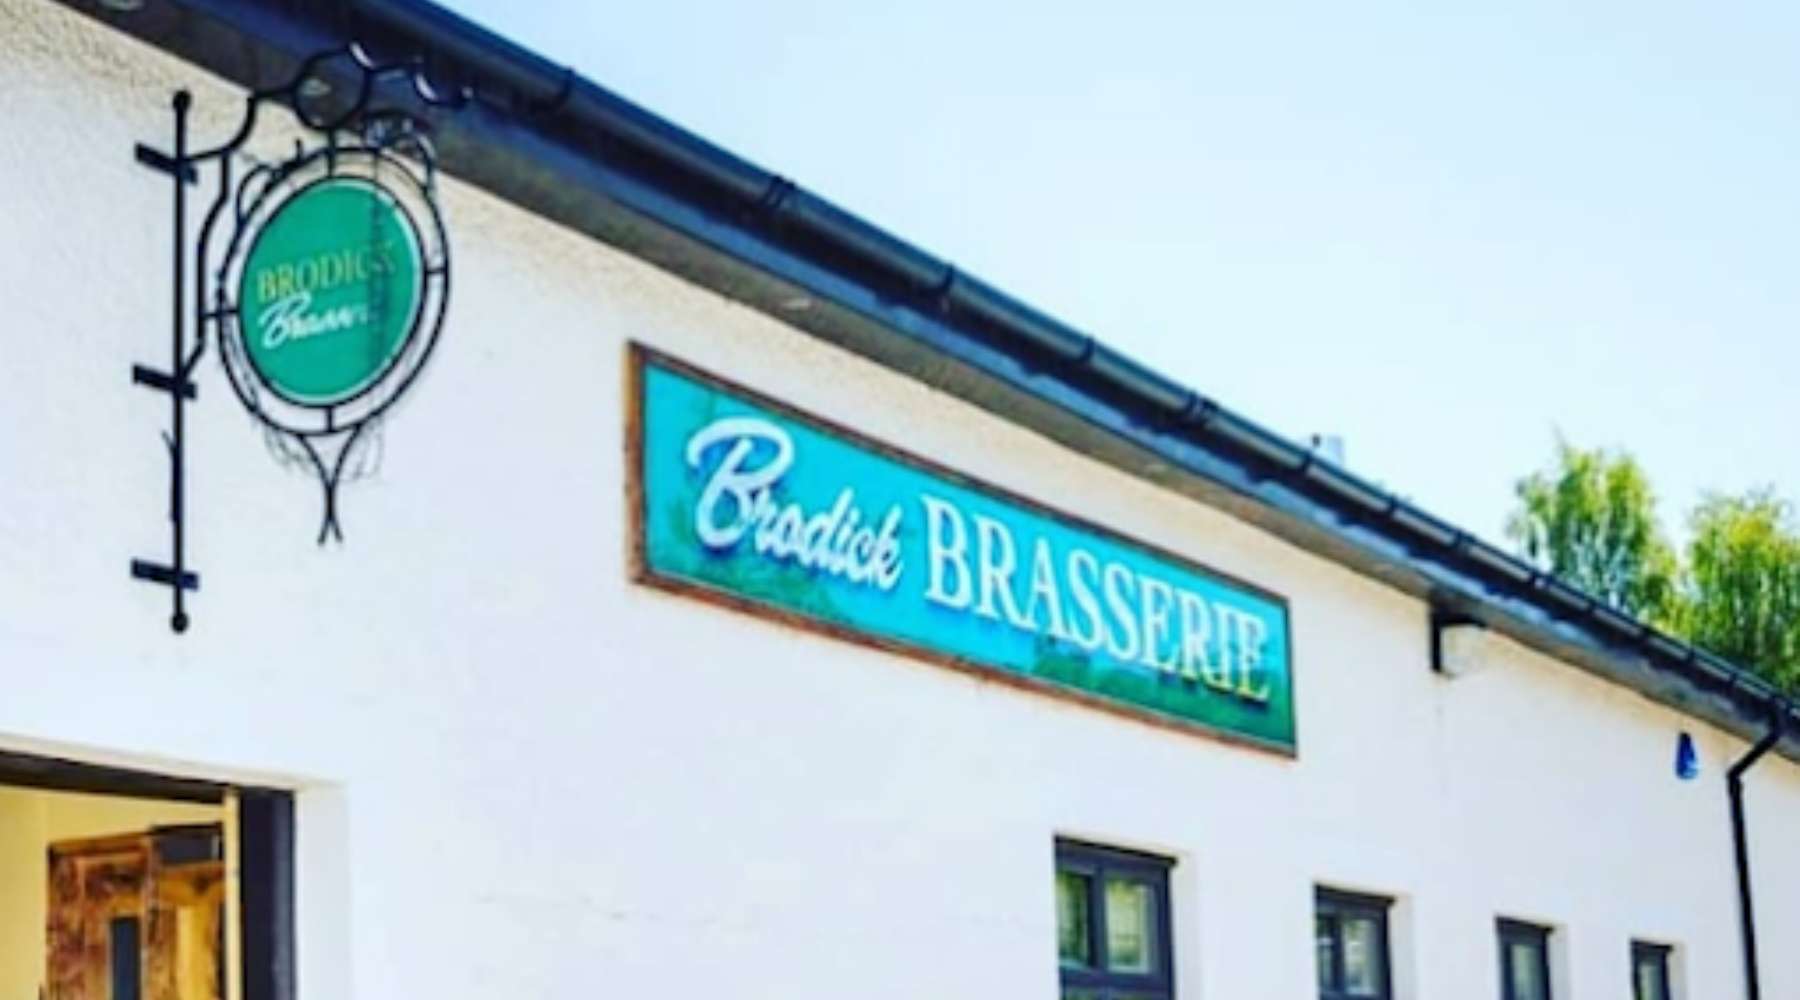 Brodick Brasserie (1)